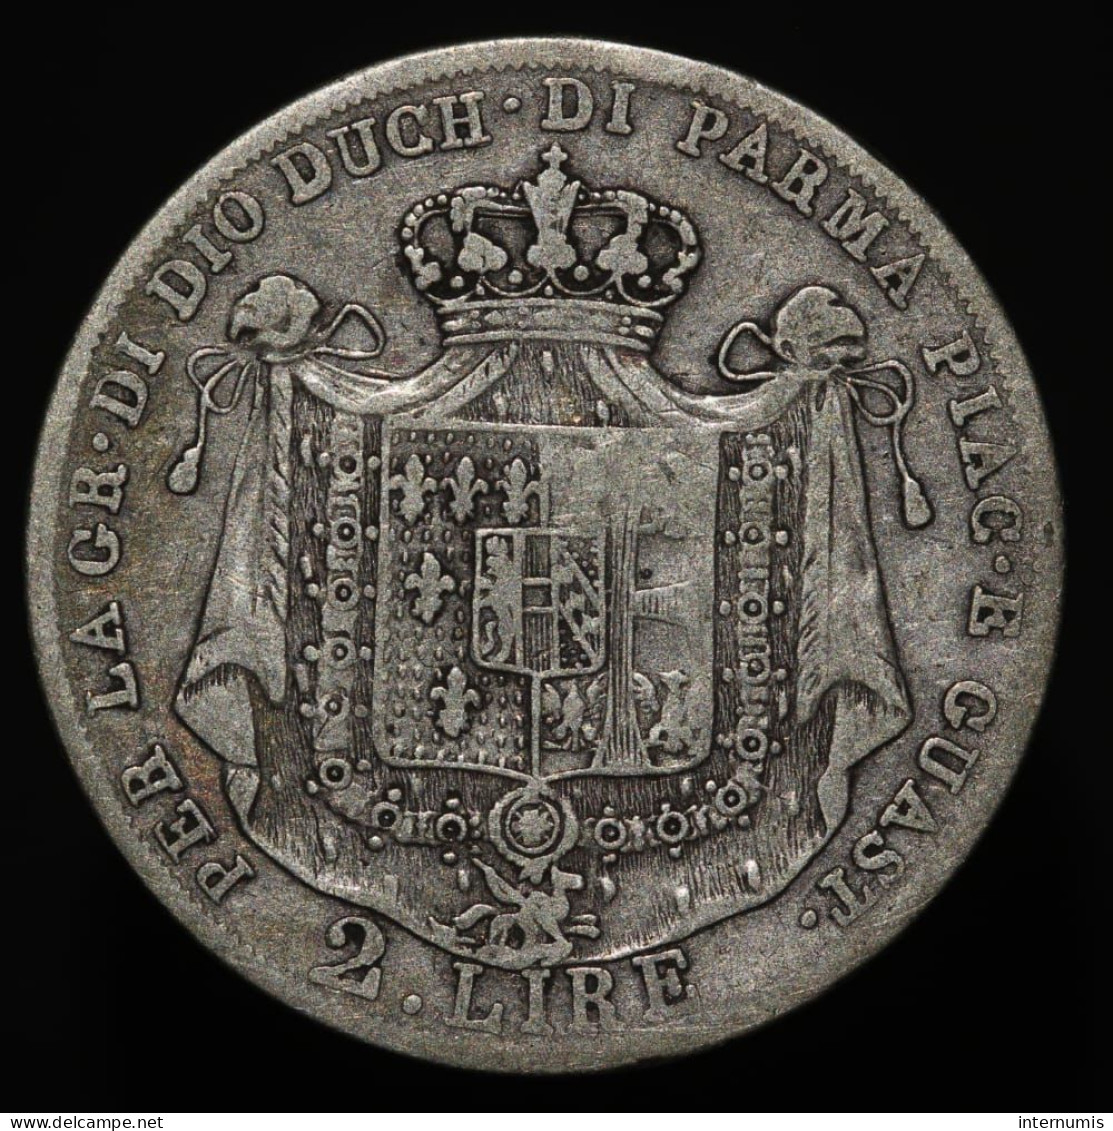 RARE - Italie / Italy, Marie-Louise (Maria Luigia) : Parma, 2 Lire, 1815, Argent (Silver), TB+ (VF), KM-C29, MIR 1094 - Parme